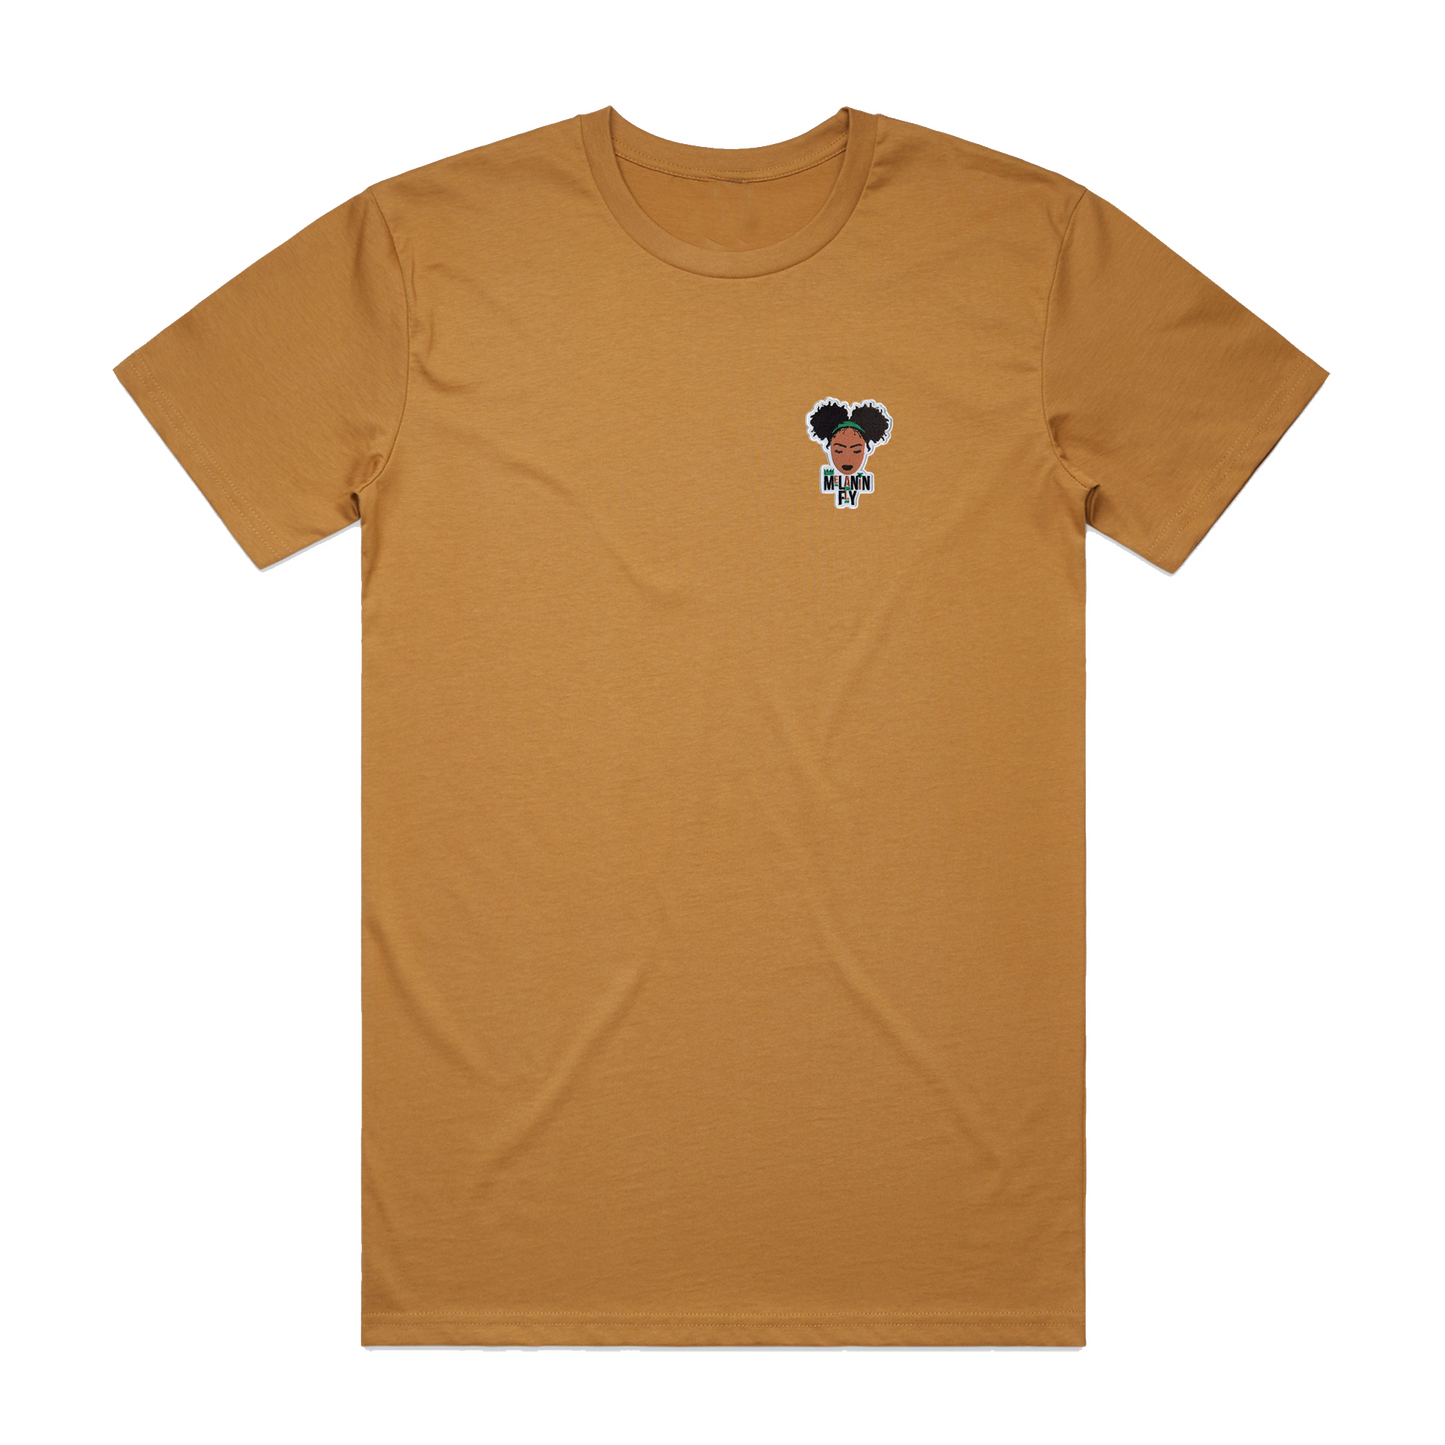 Melanin Fly Patch Unisex T-Shirt - Camel